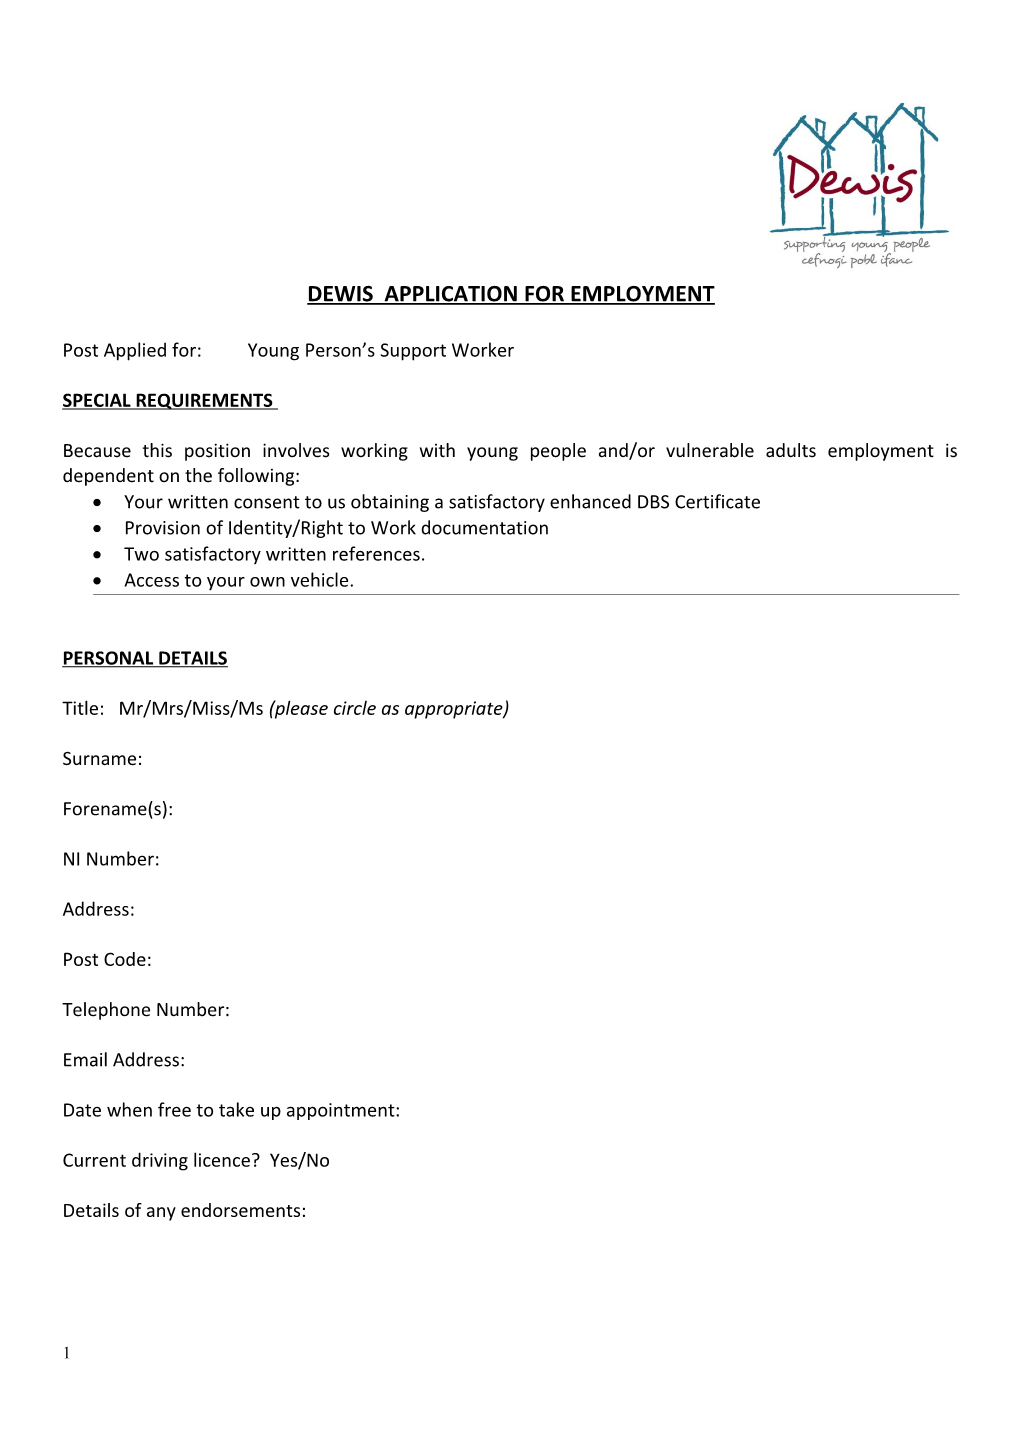 Dewis Application for Employment